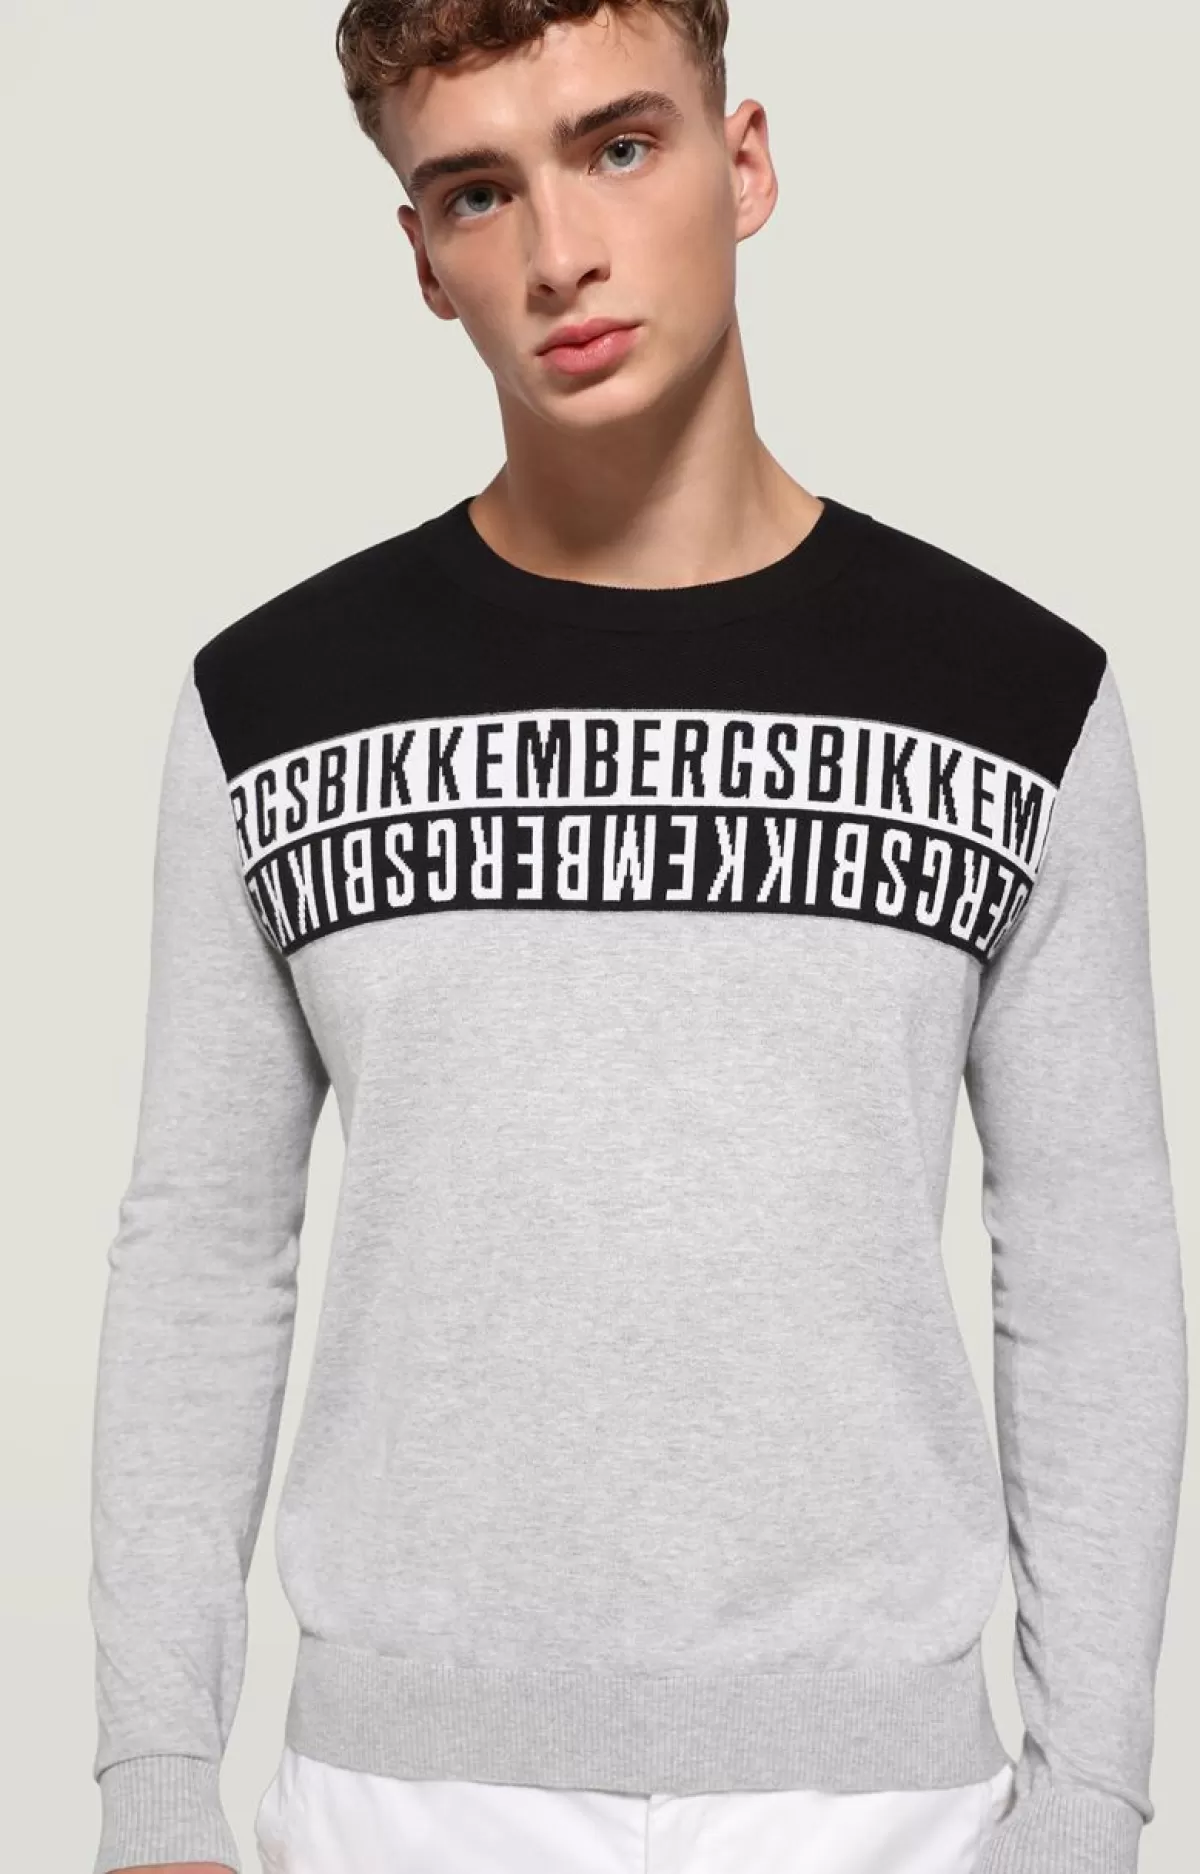 Bikkembergs Men'S Sweater With Jacquard Tape Grey/Black/White/Black Store